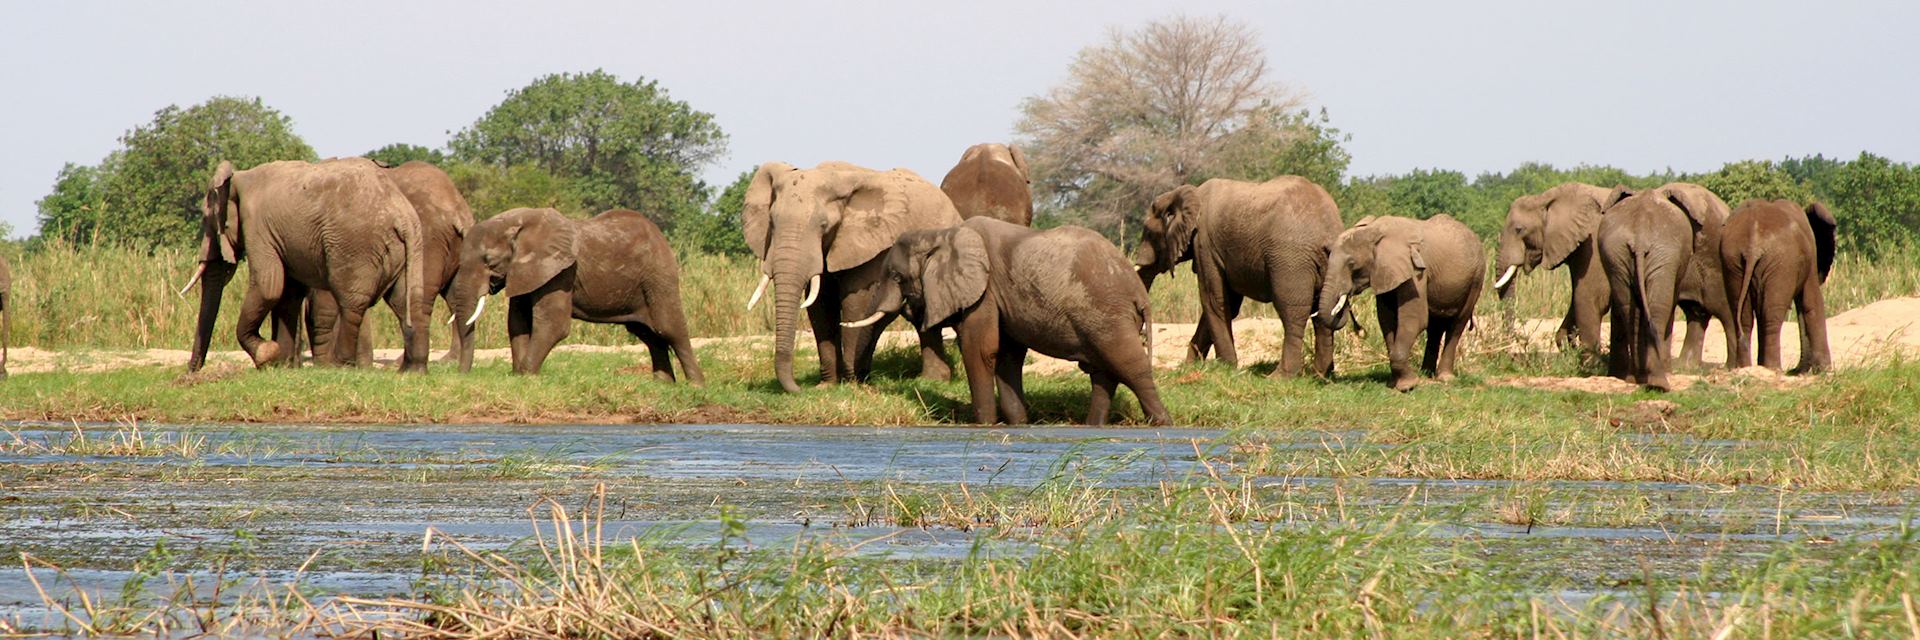 Elephants in Lower Zambezi National Park